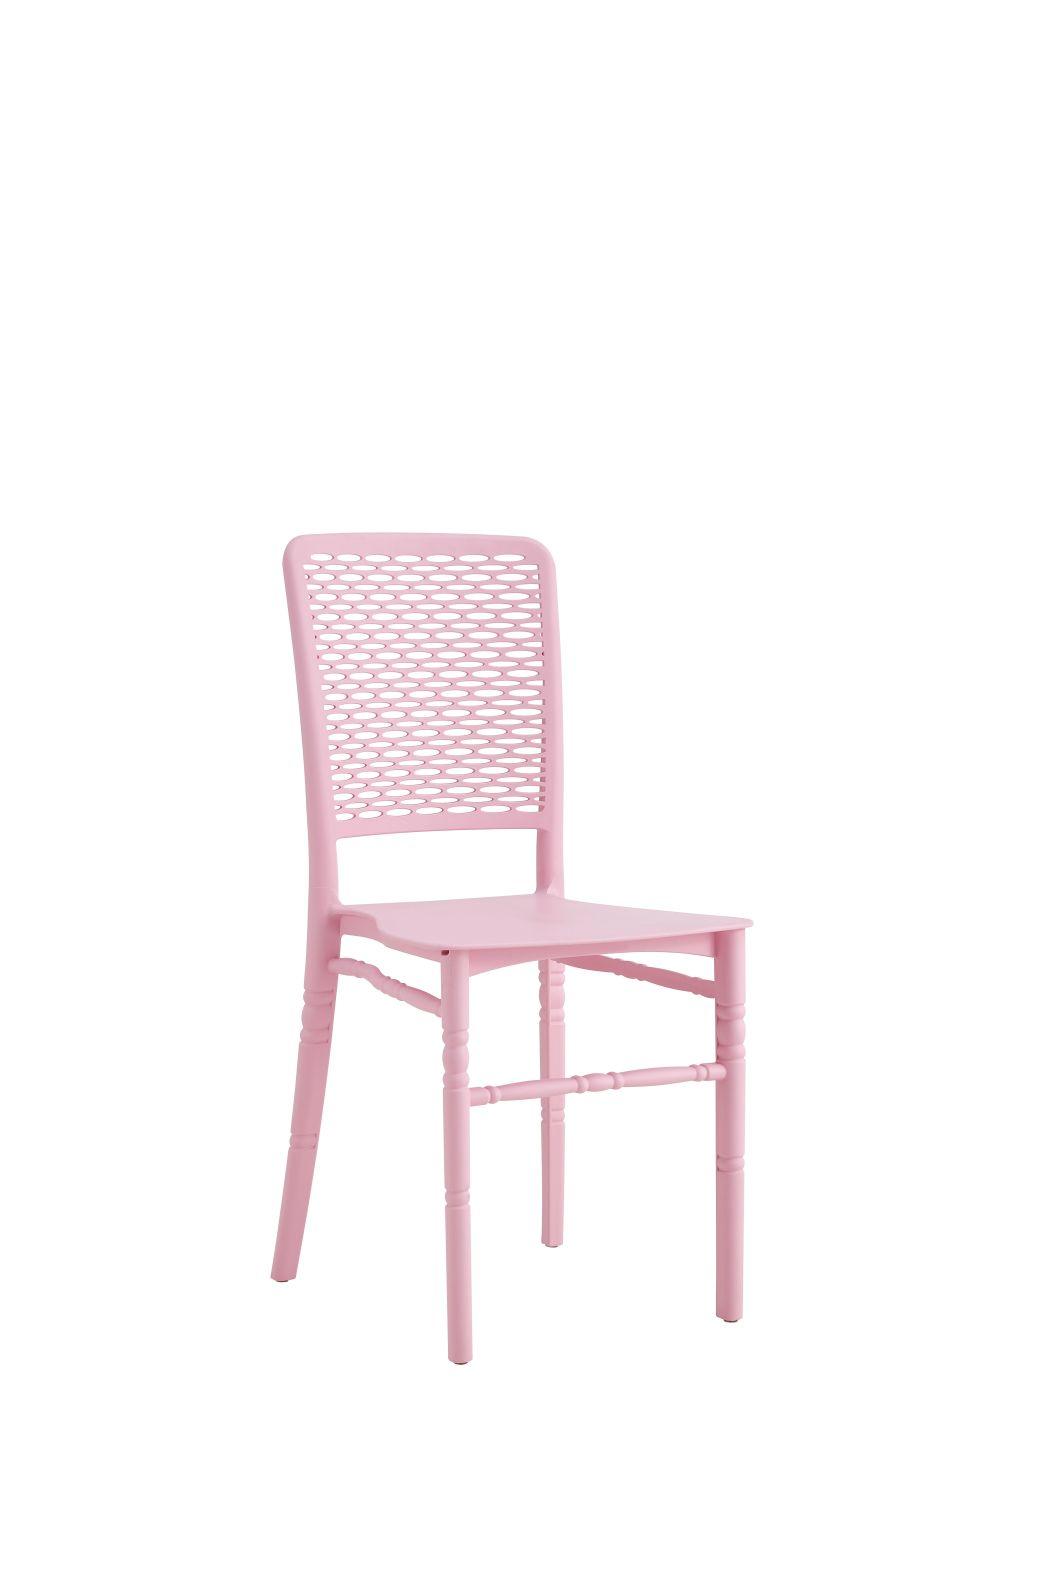 2018 New Style Heavy Duty Plastic Chair Plastic Armchair White Plastic Chair